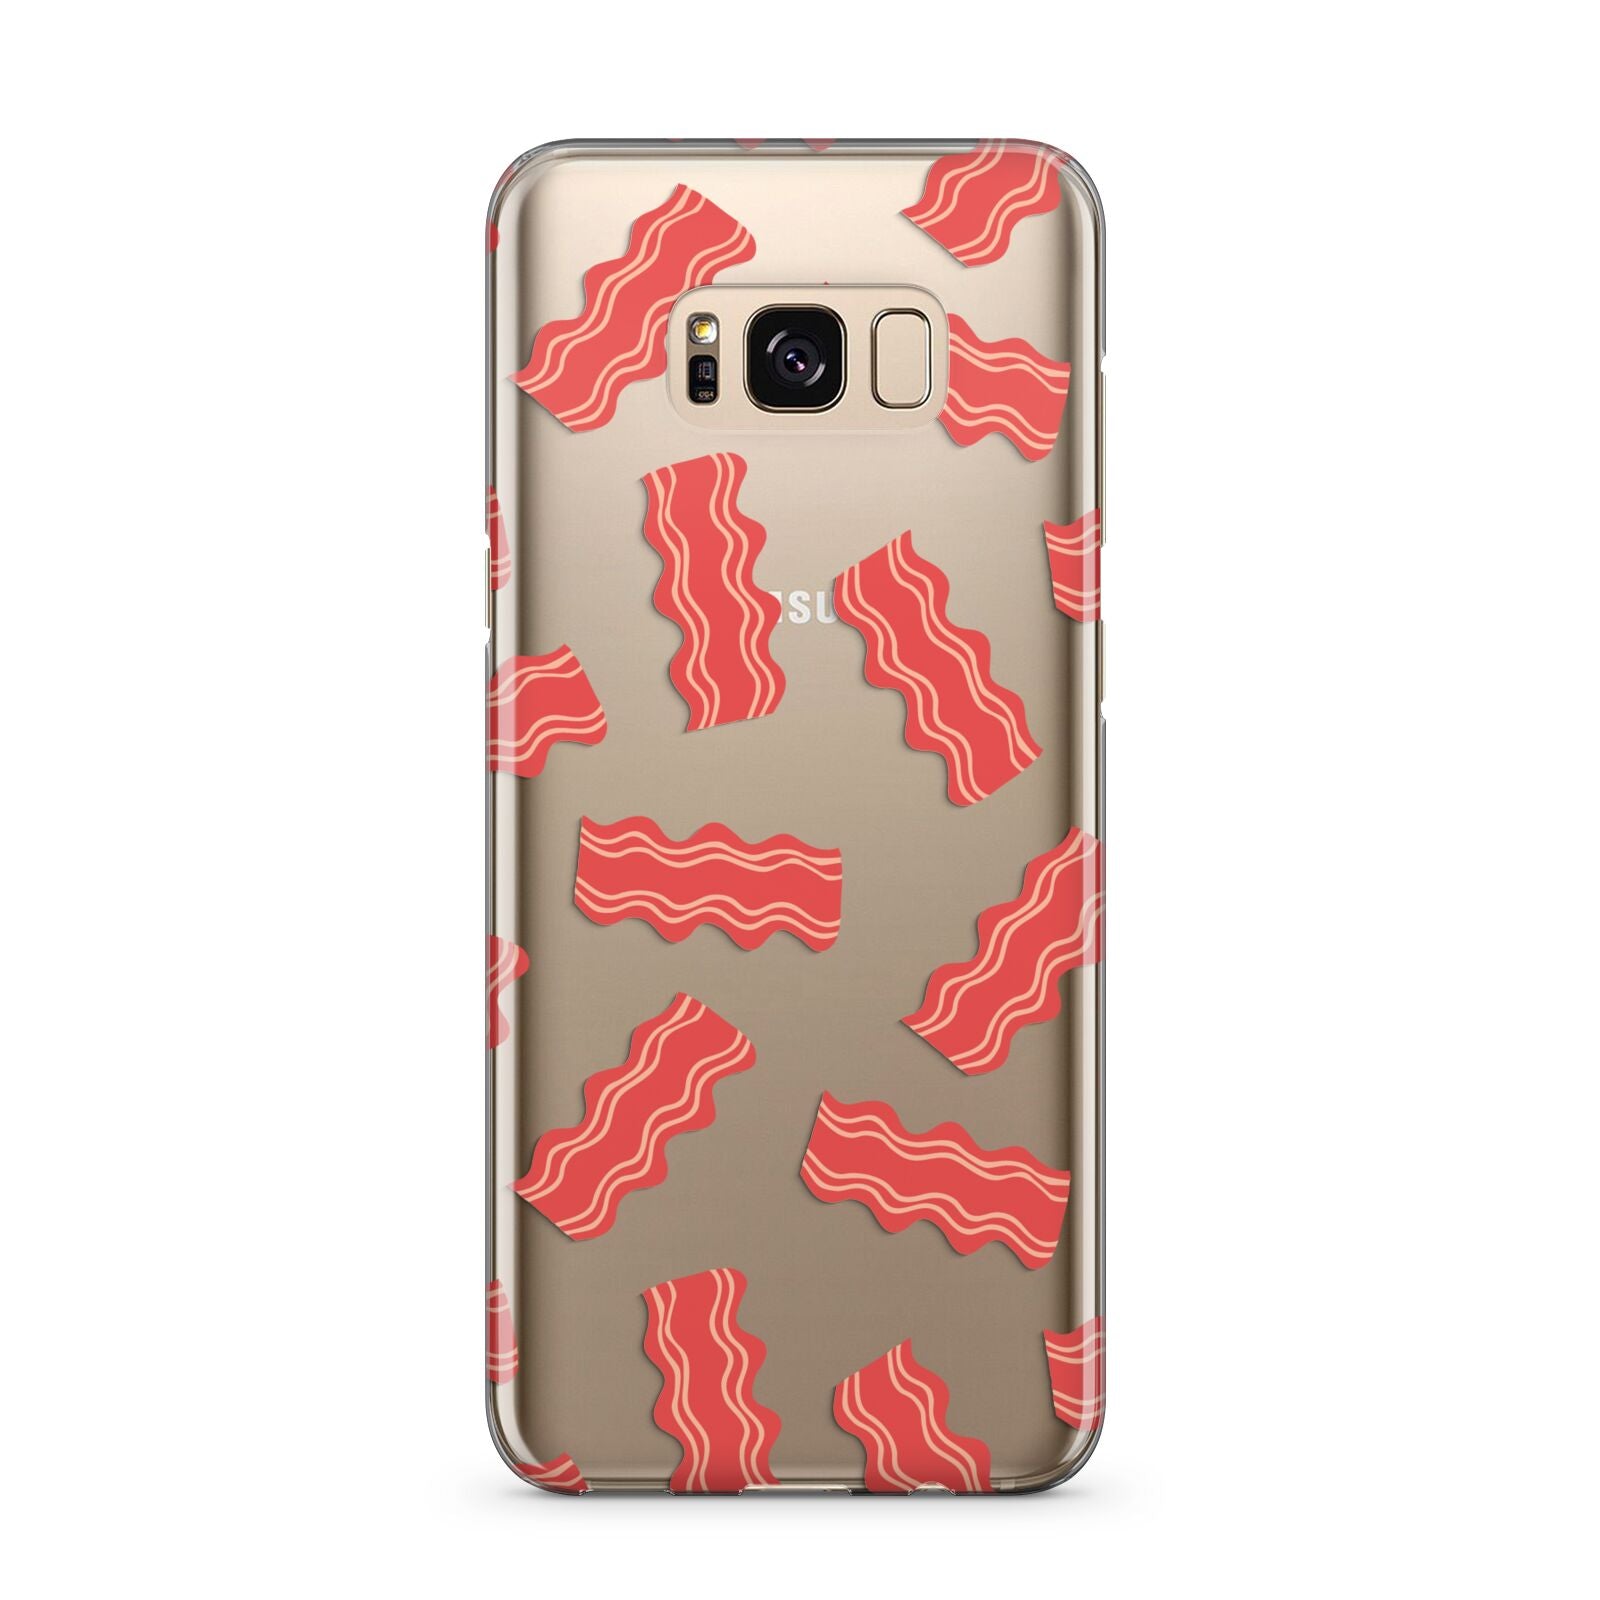 Bacon Samsung Galaxy S8 Plus Case